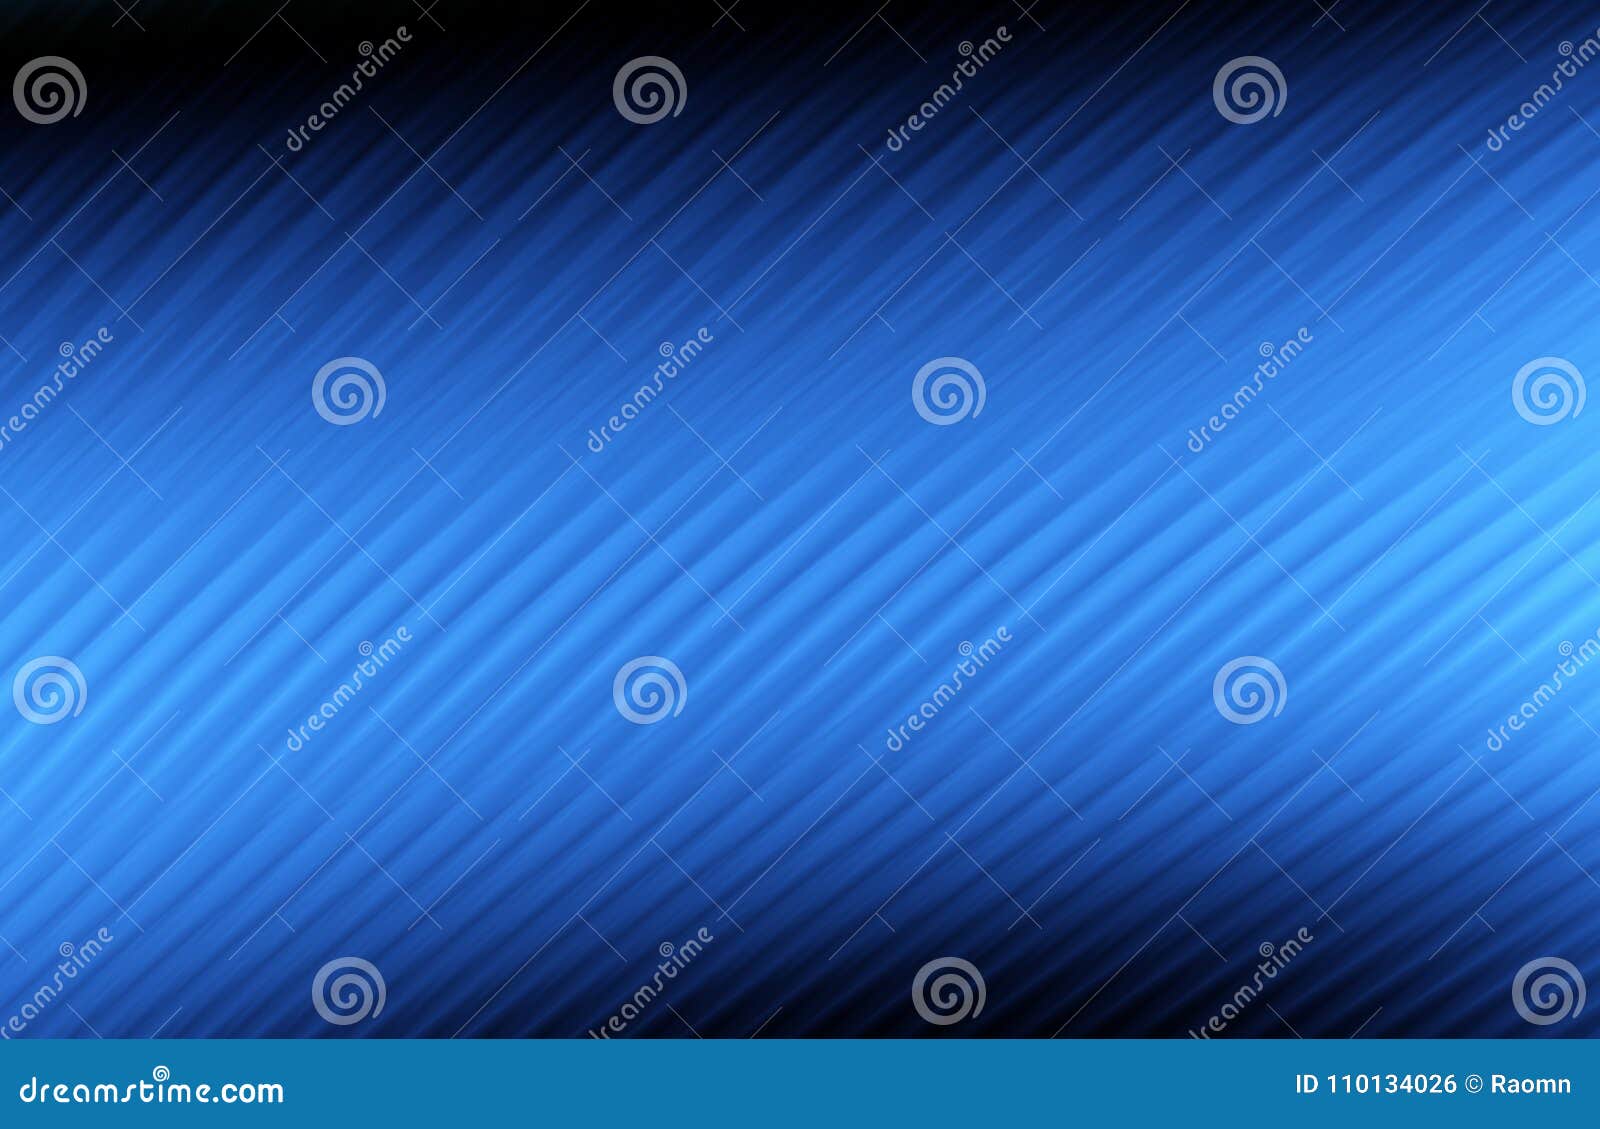 Luxury Elegant Pattern Blue Background Stock Illustration ...